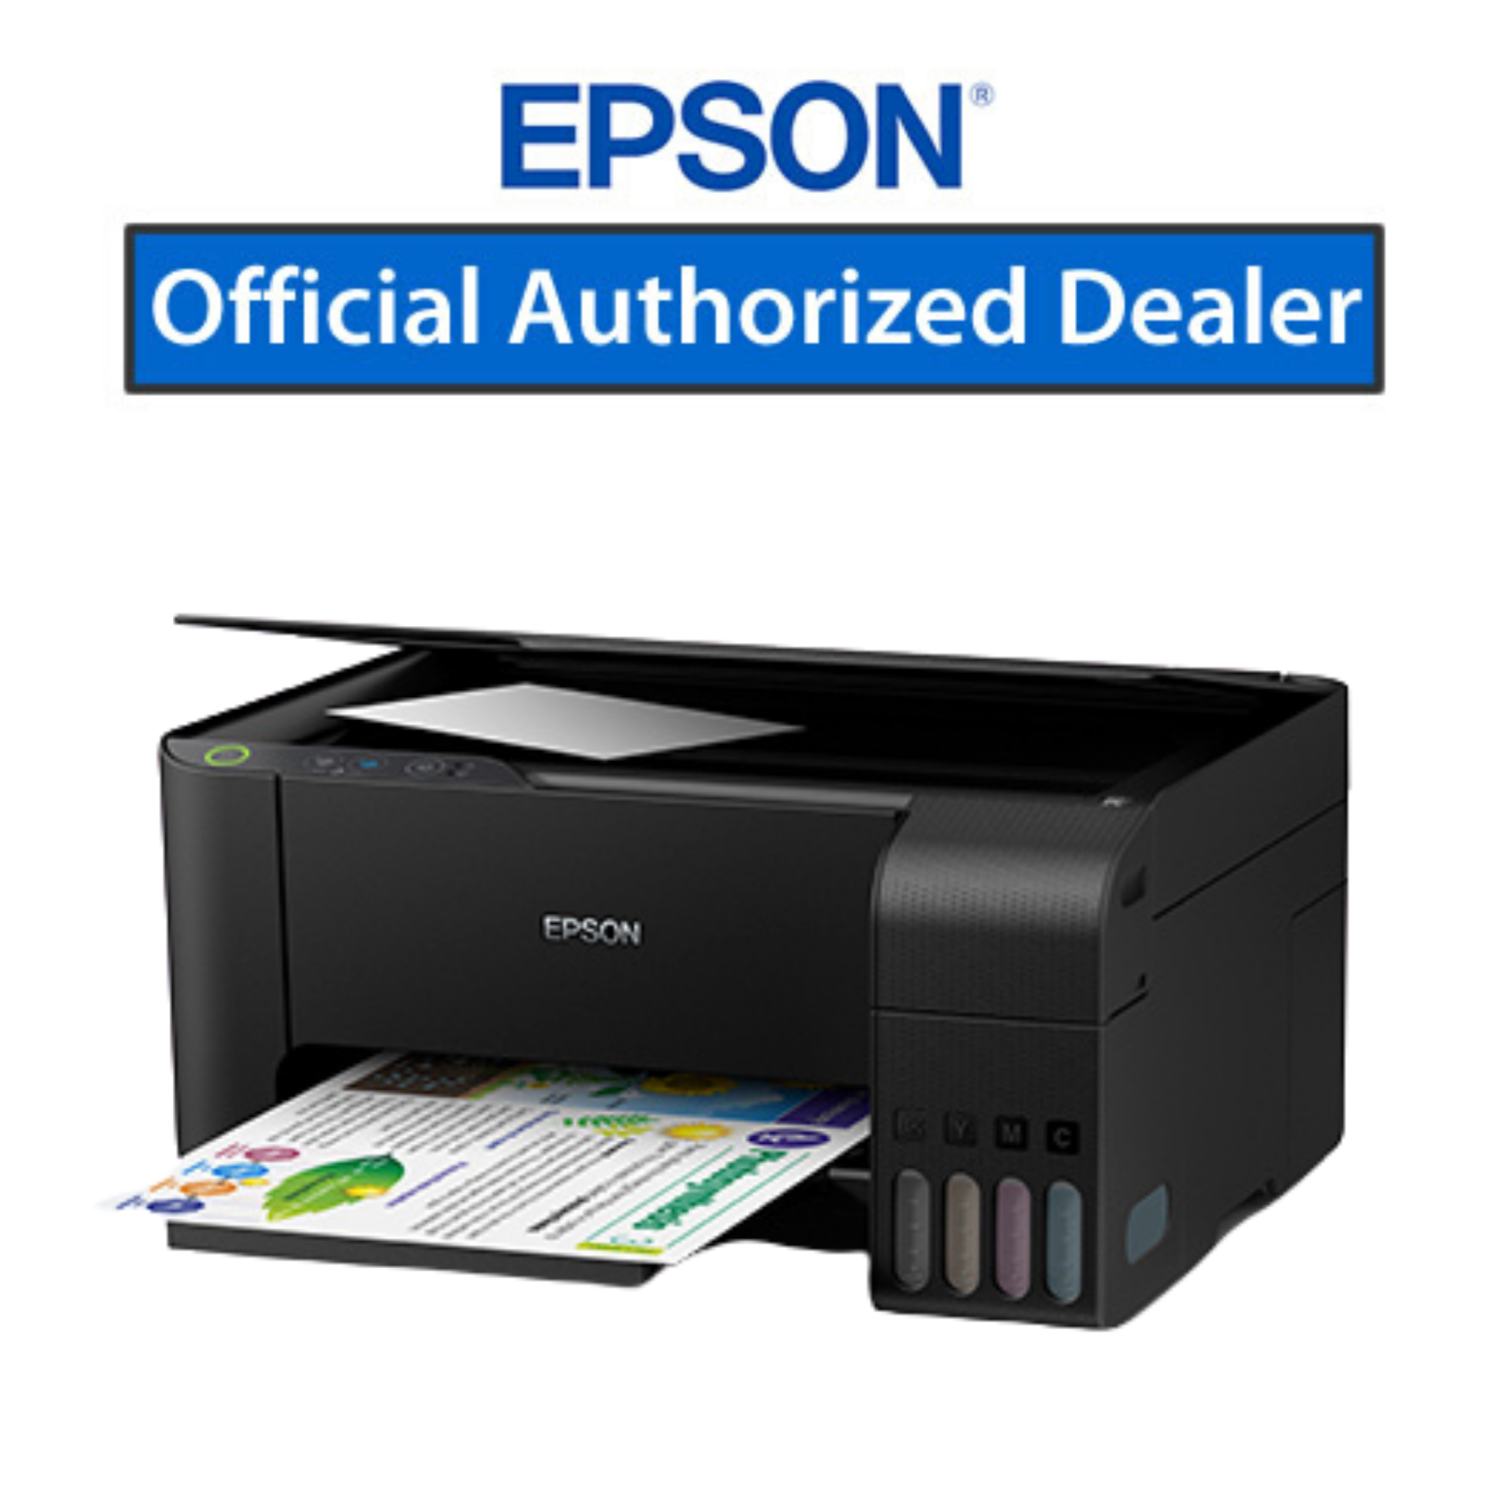 Epson ECOTANK l3210. Принтер Epson 3110. Принтер Epson 3210. МФУ + СНПЧ ECOTANK Epson l3210. Мфу струйный epson ecotank l3210